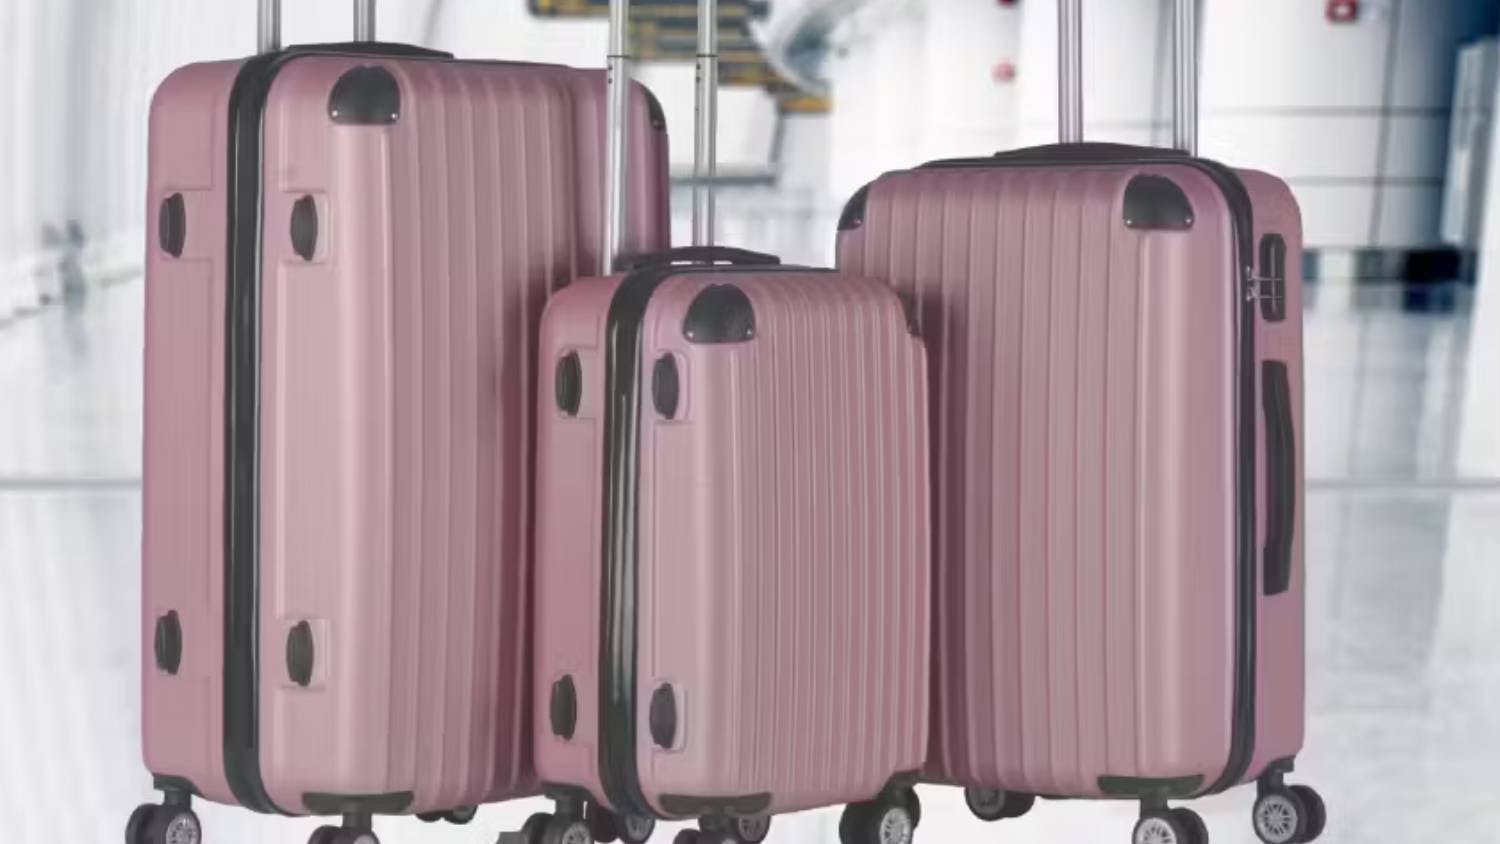 Milano Slim Premium Luggage Set 3pcs. - Rose Gold